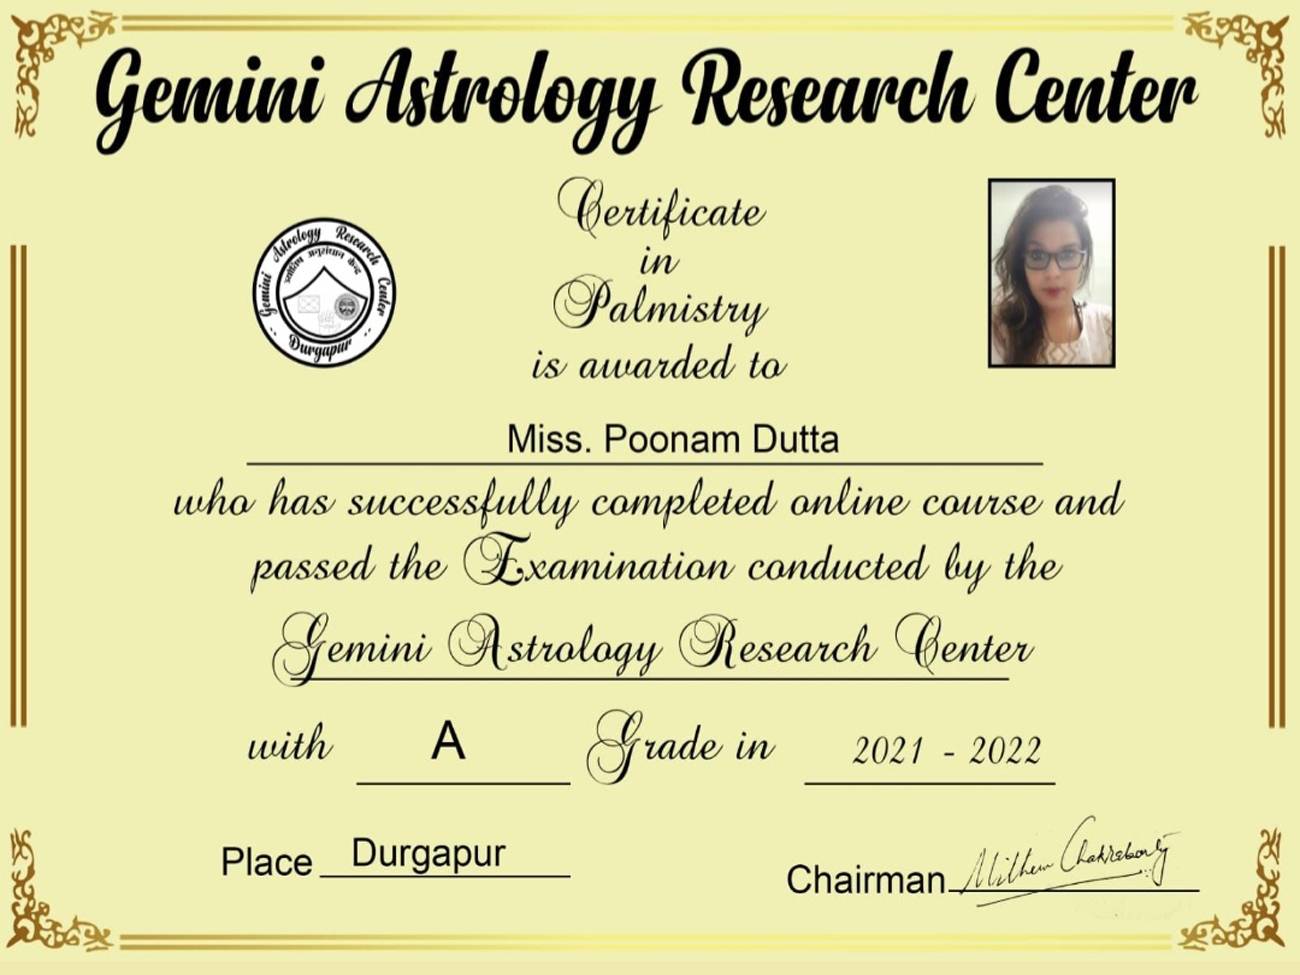 Poonam Dutta certificate in palmistry